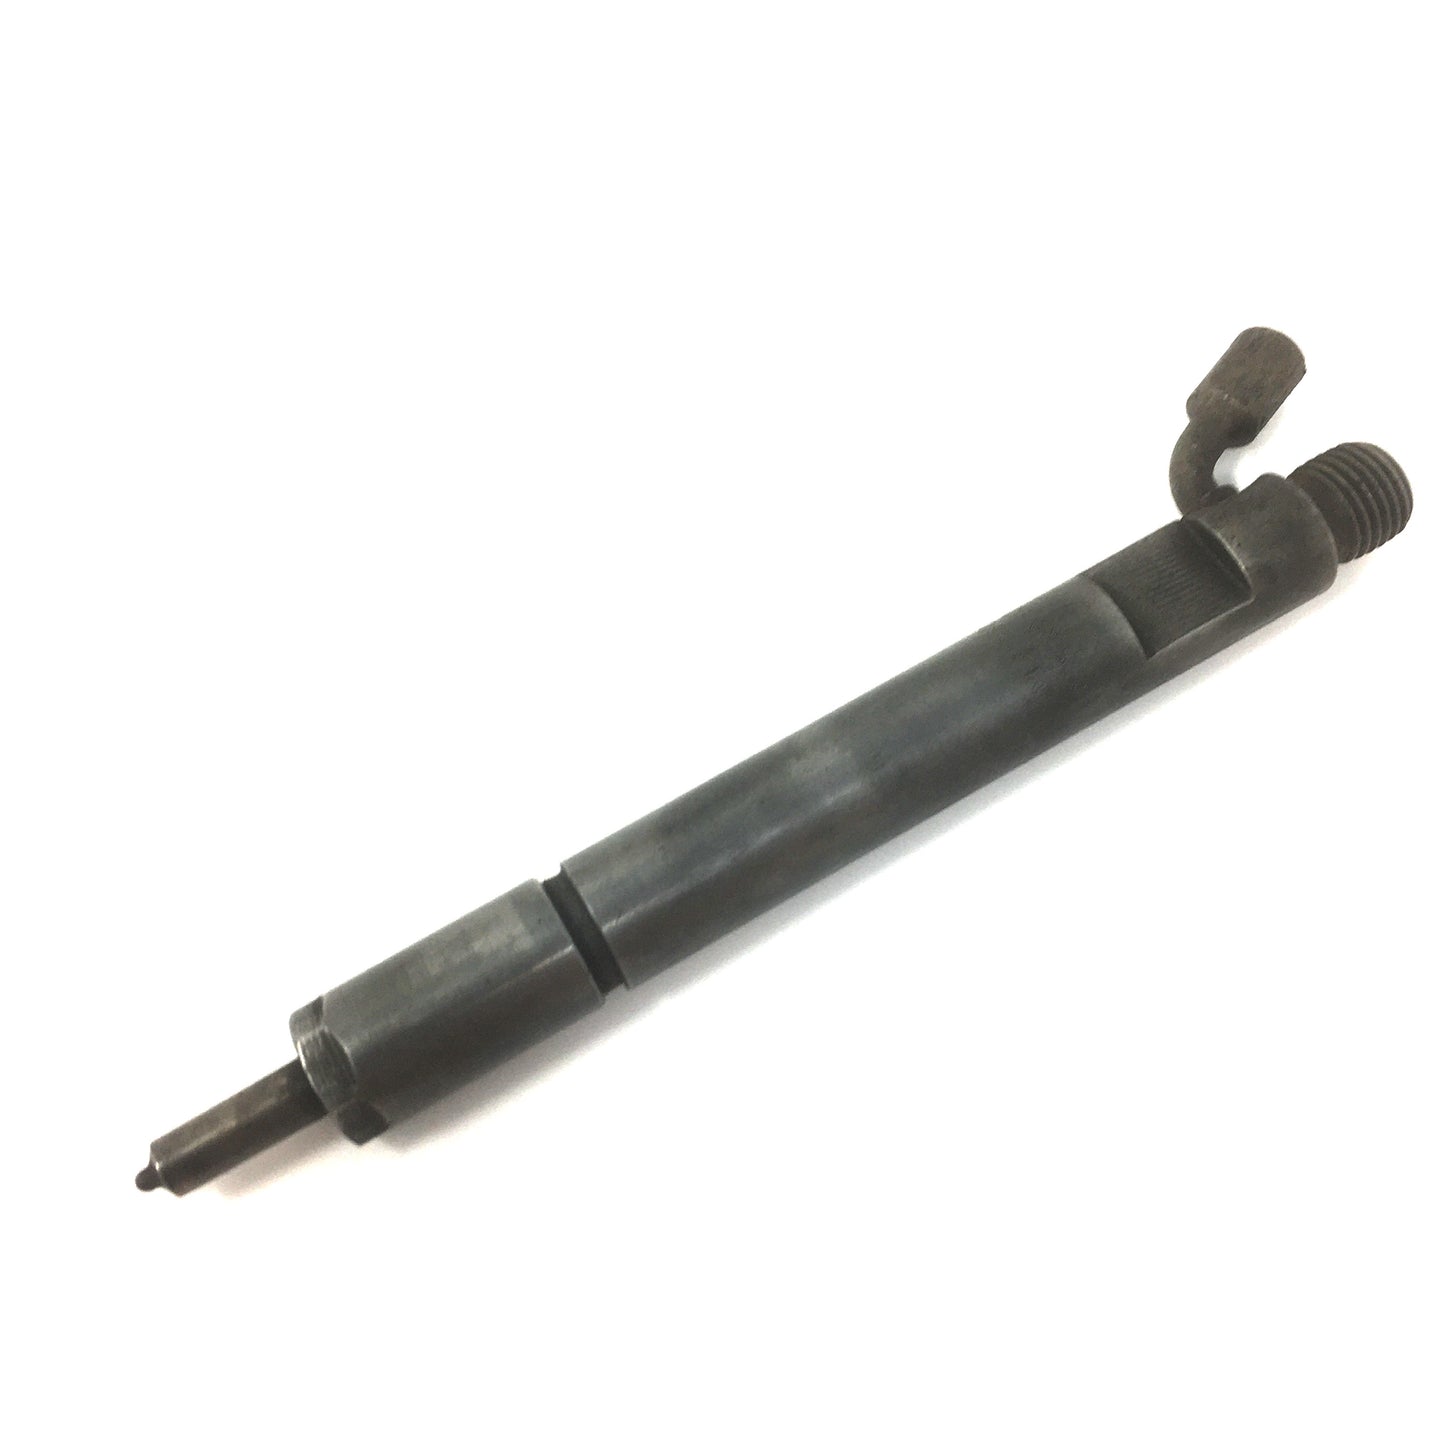 Bosch Fuel Injector for IH Case Industrial 821C (0-432-191-595)